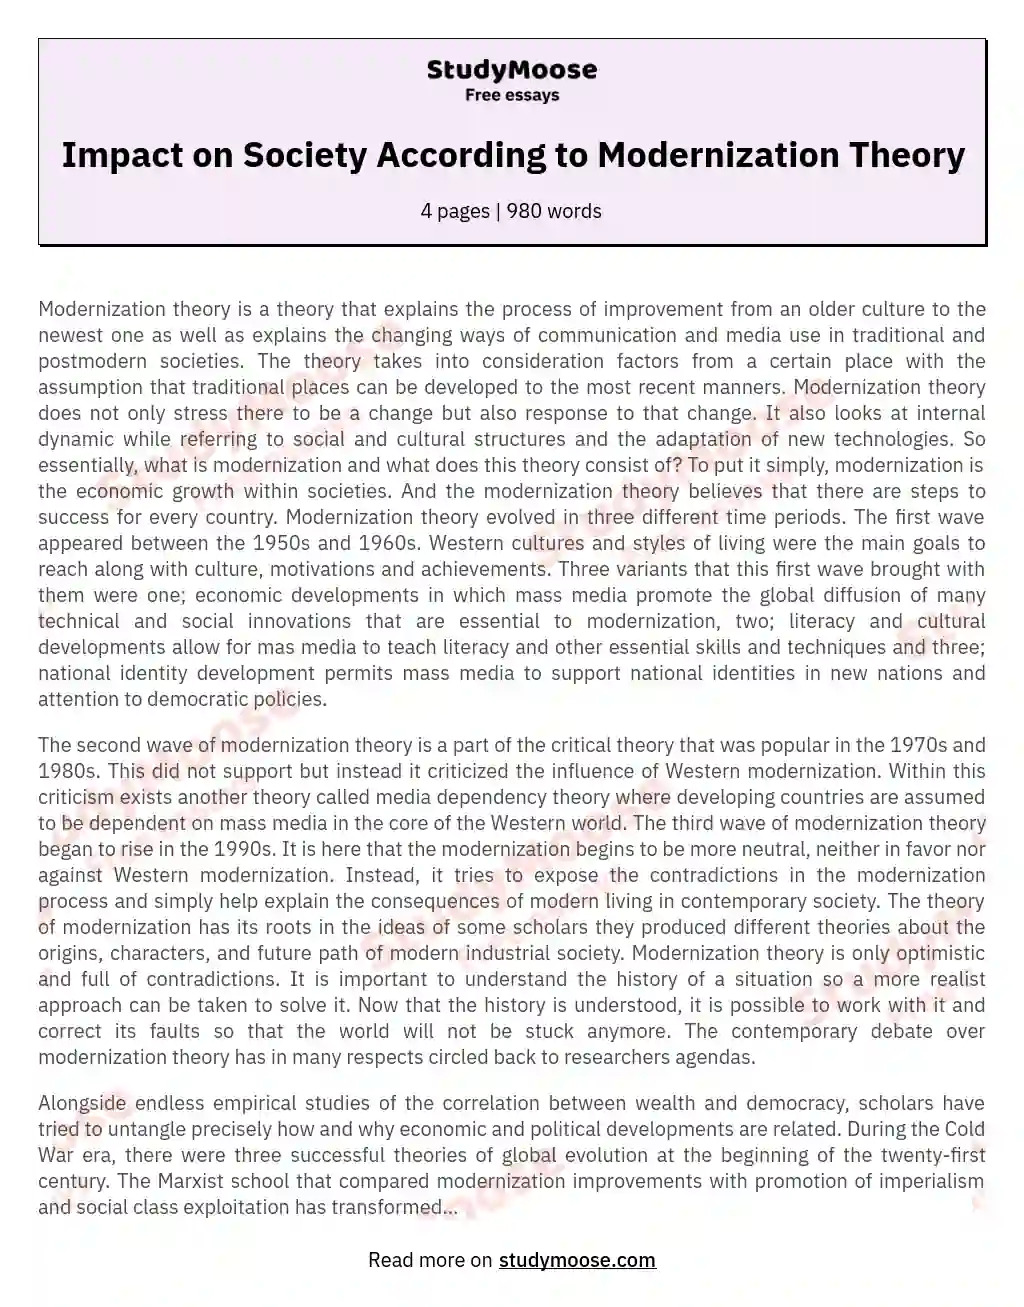 Impact on Society According to Modernization Theory essay